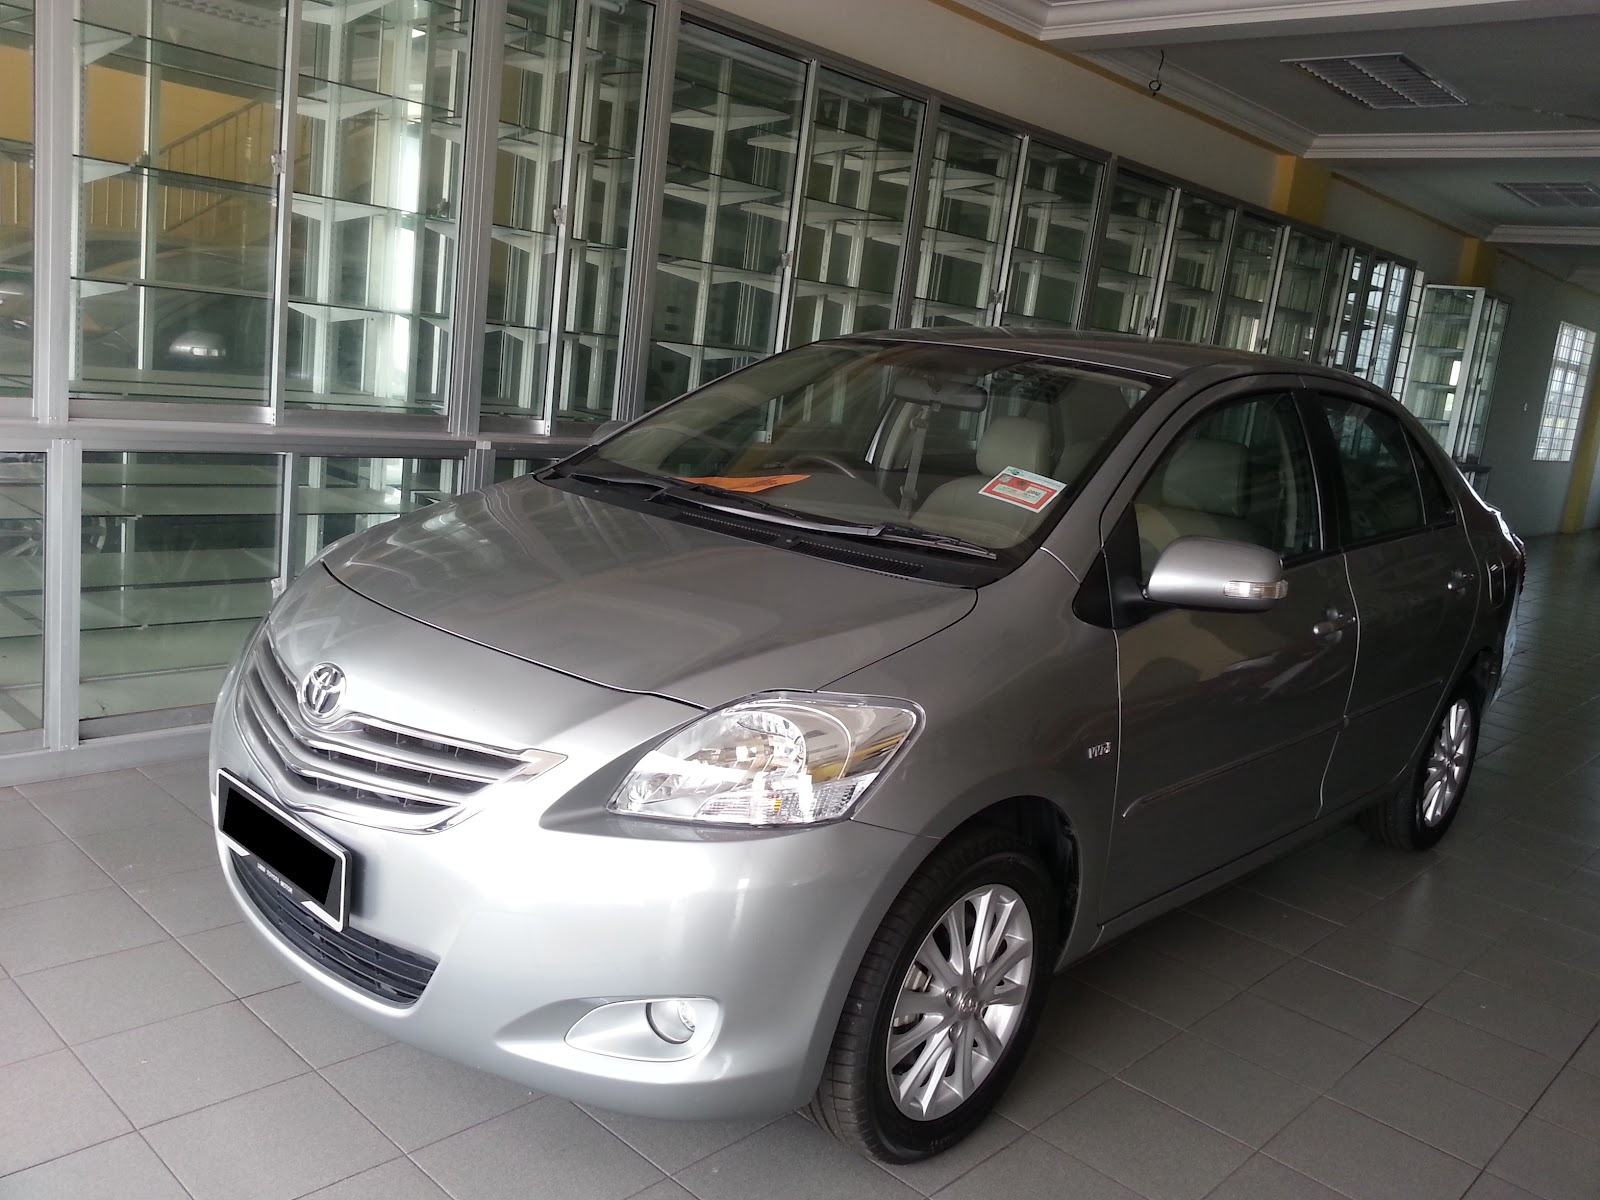 2nd Car Malaysia: Toyota Vios 1.5G (A) Silver